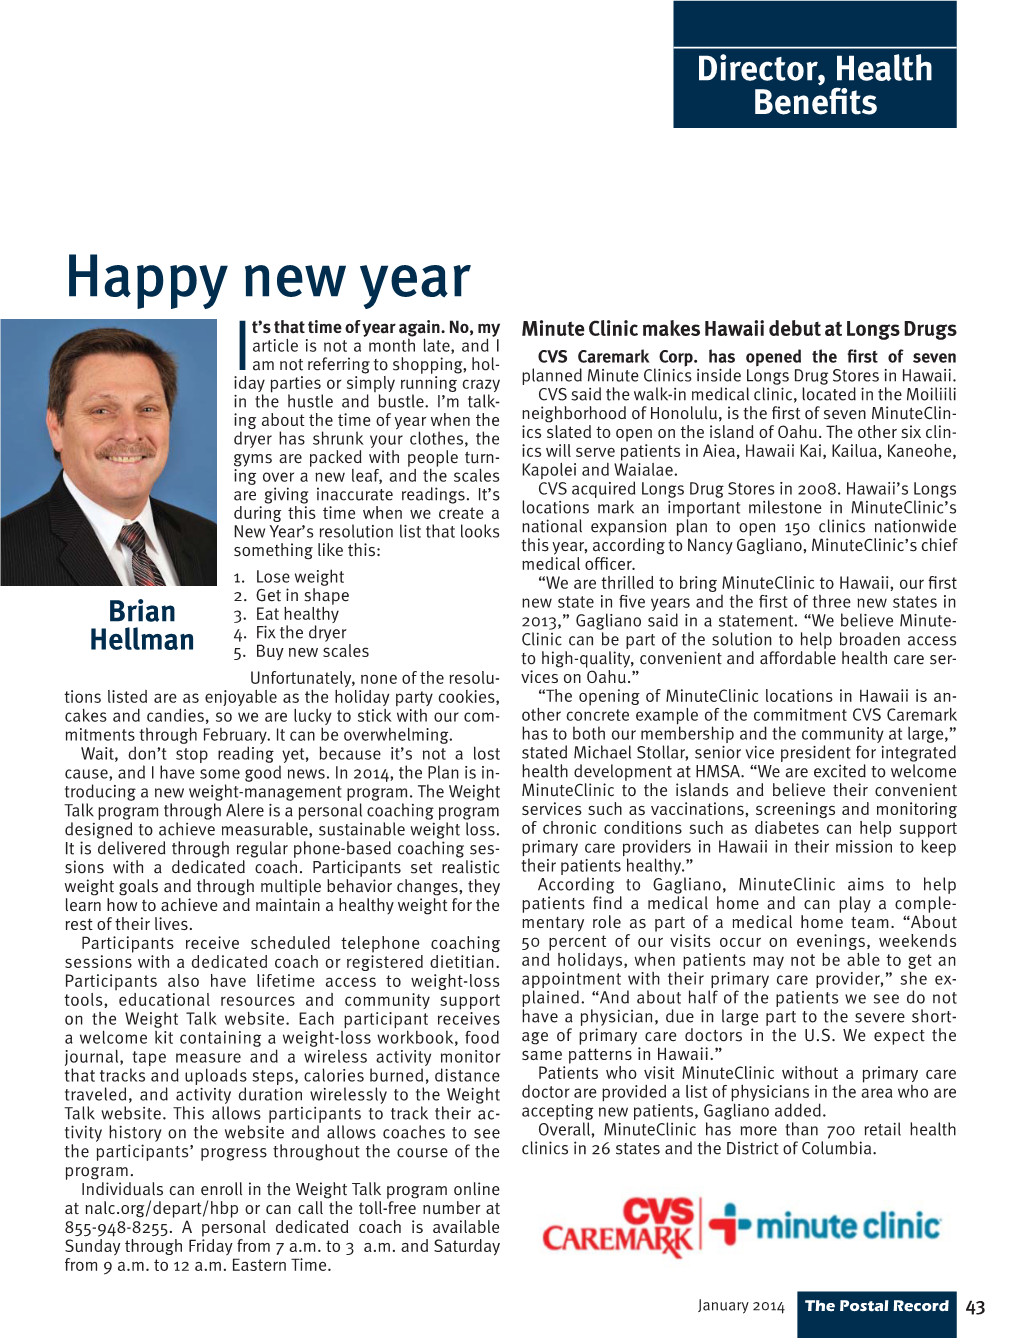 Director of Health Benefits Happy New Year